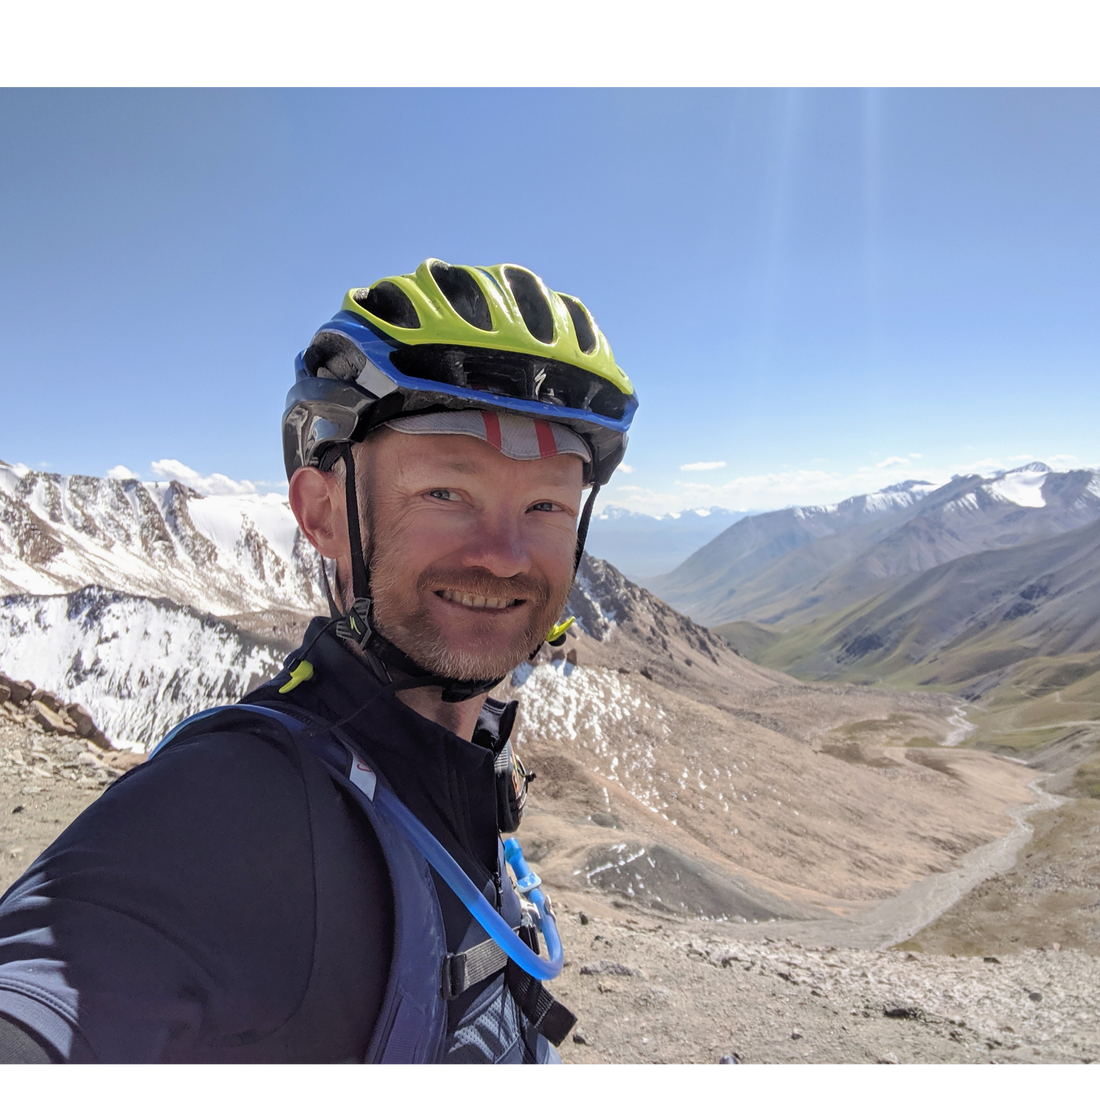 Through The Portal: The 2019 Silk Road Mountain Race by Brendan Hills